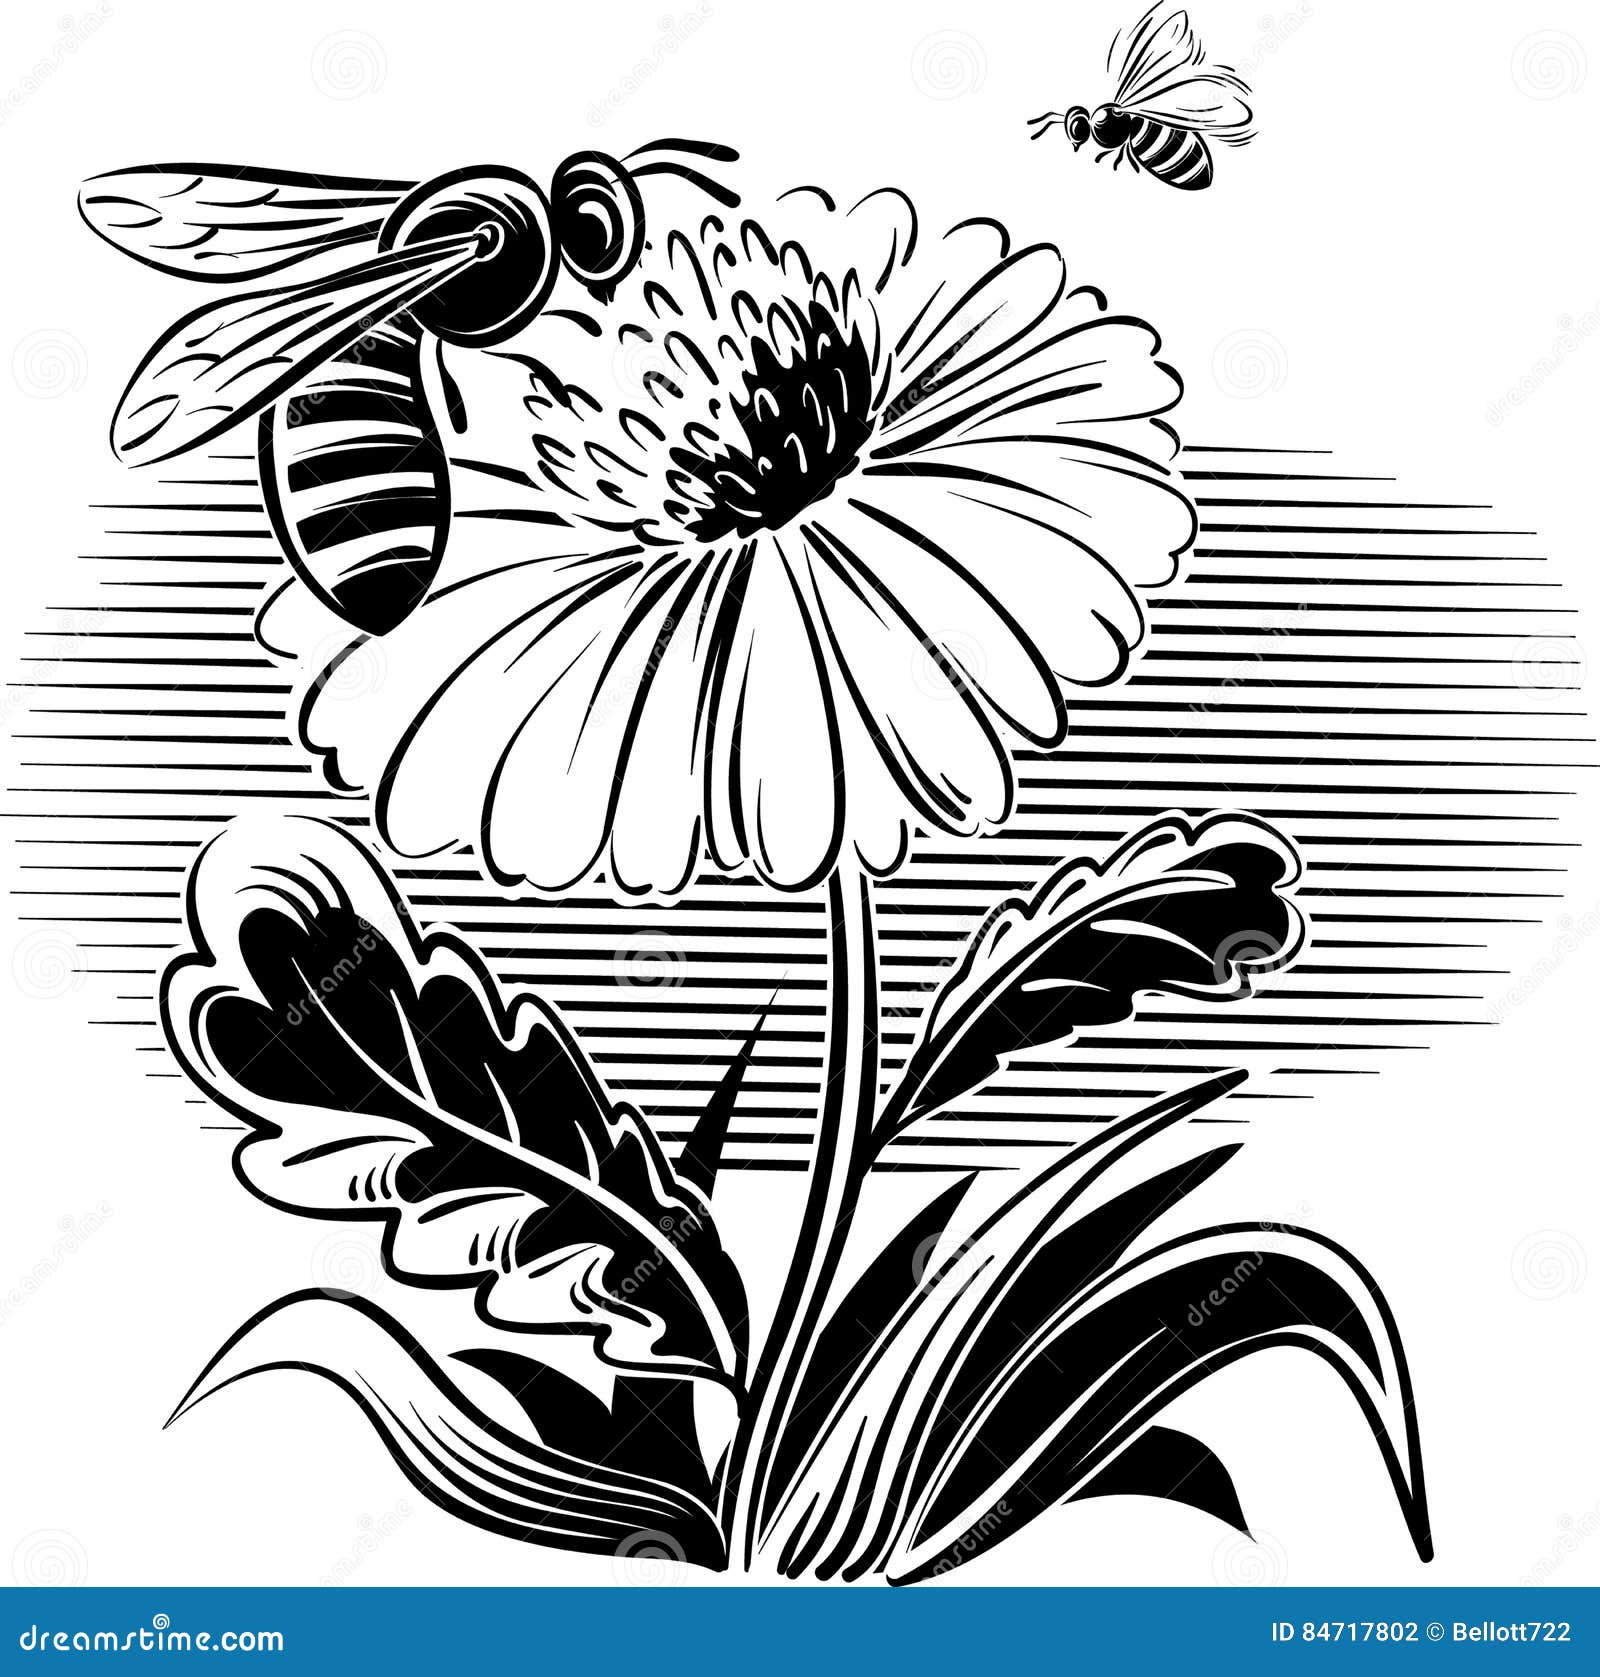 Worker bee on a flower. stock illustration. Illustration of flower ...